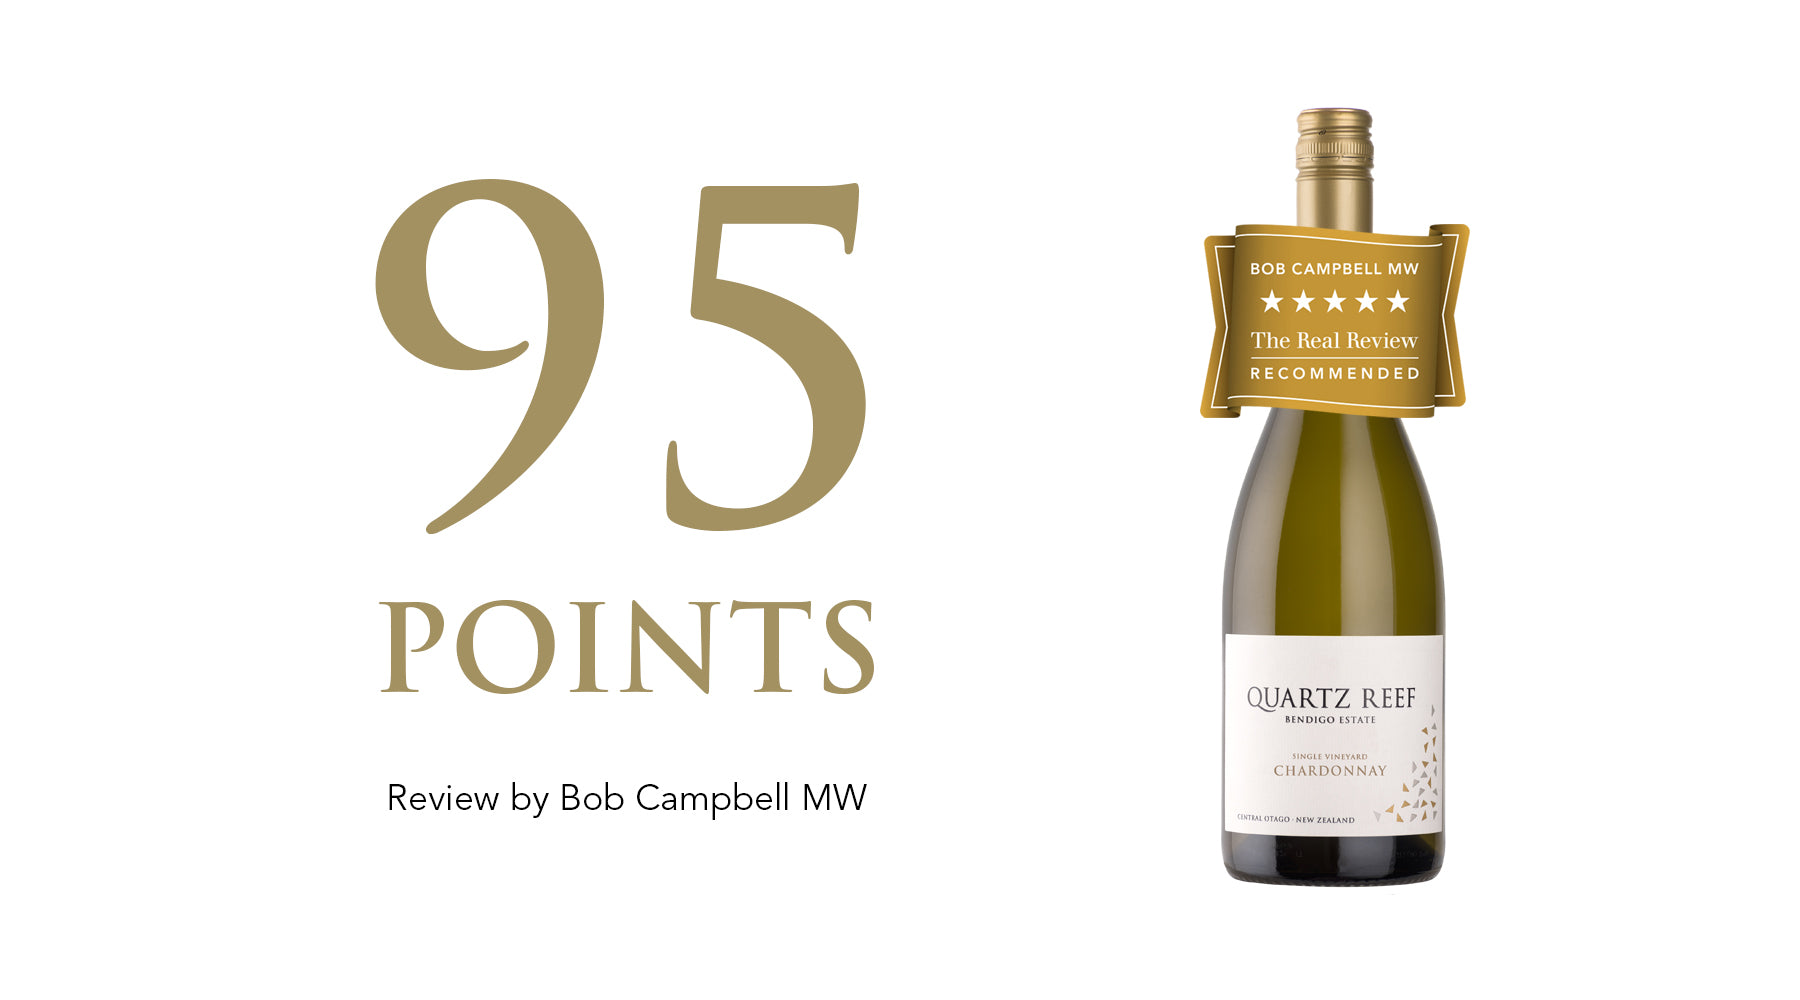 Chardonnay 2018 - Awarded 95 Points